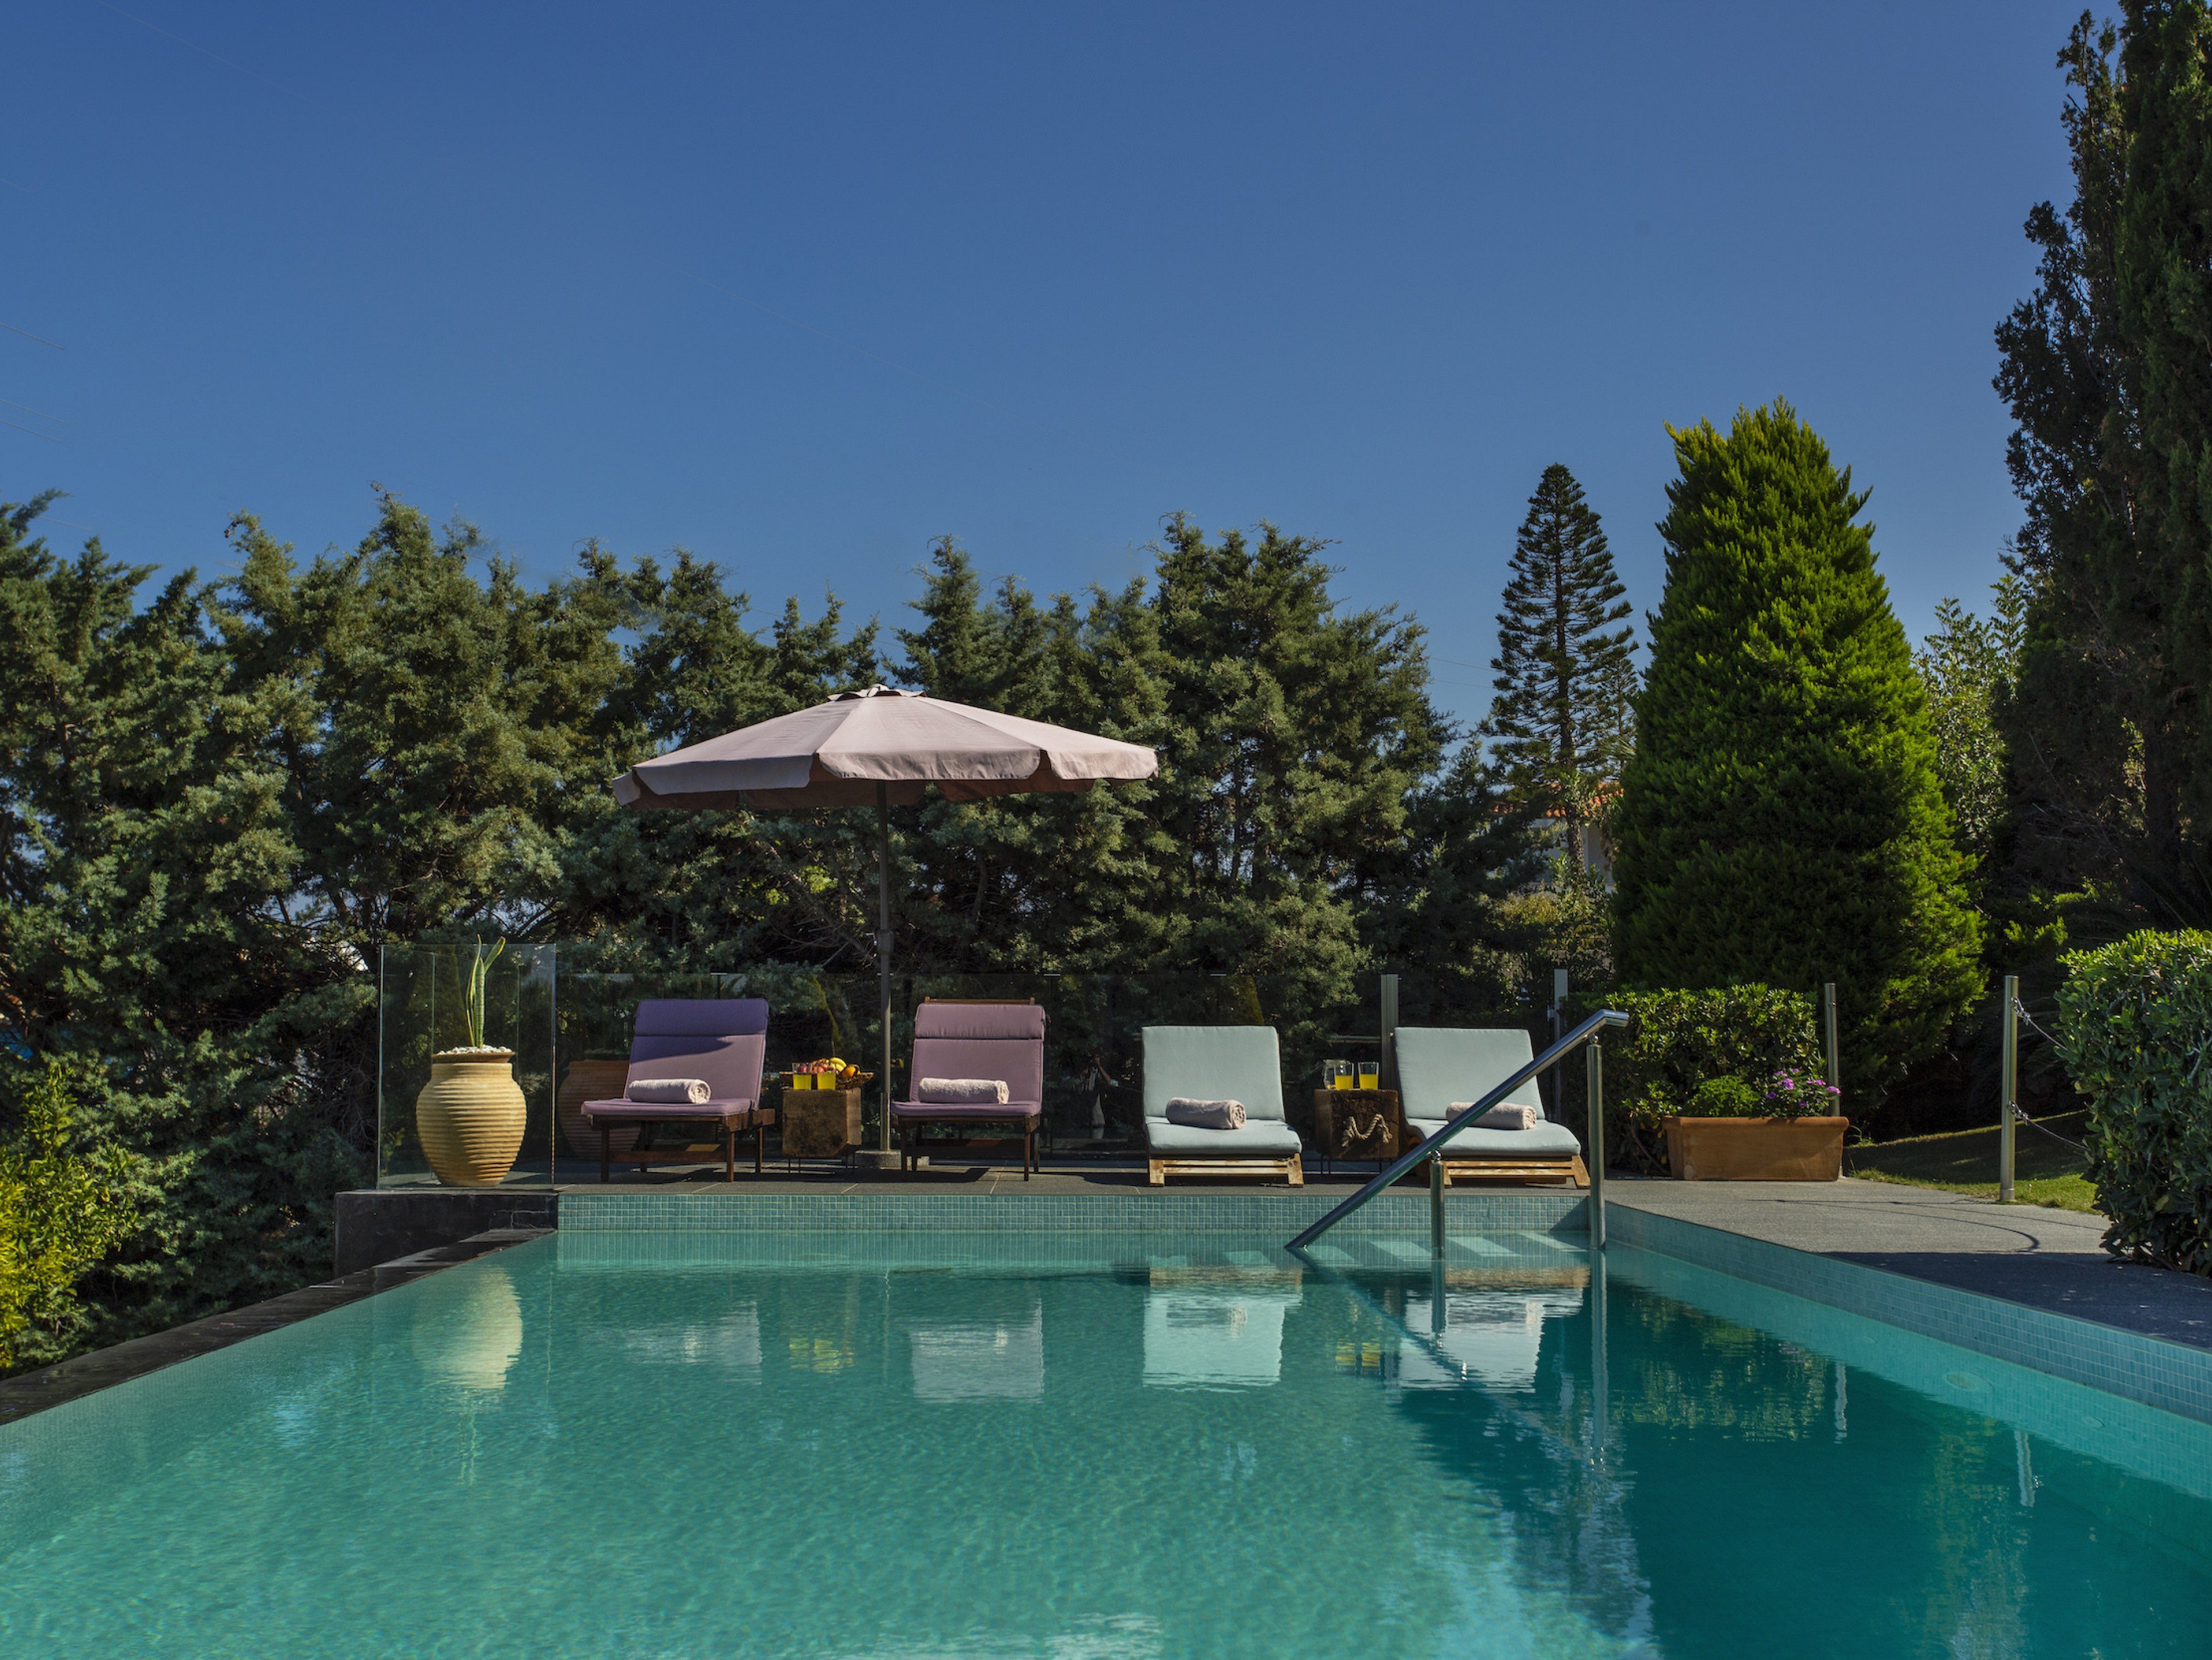 Villa Golden Crest summer home rentals with pools